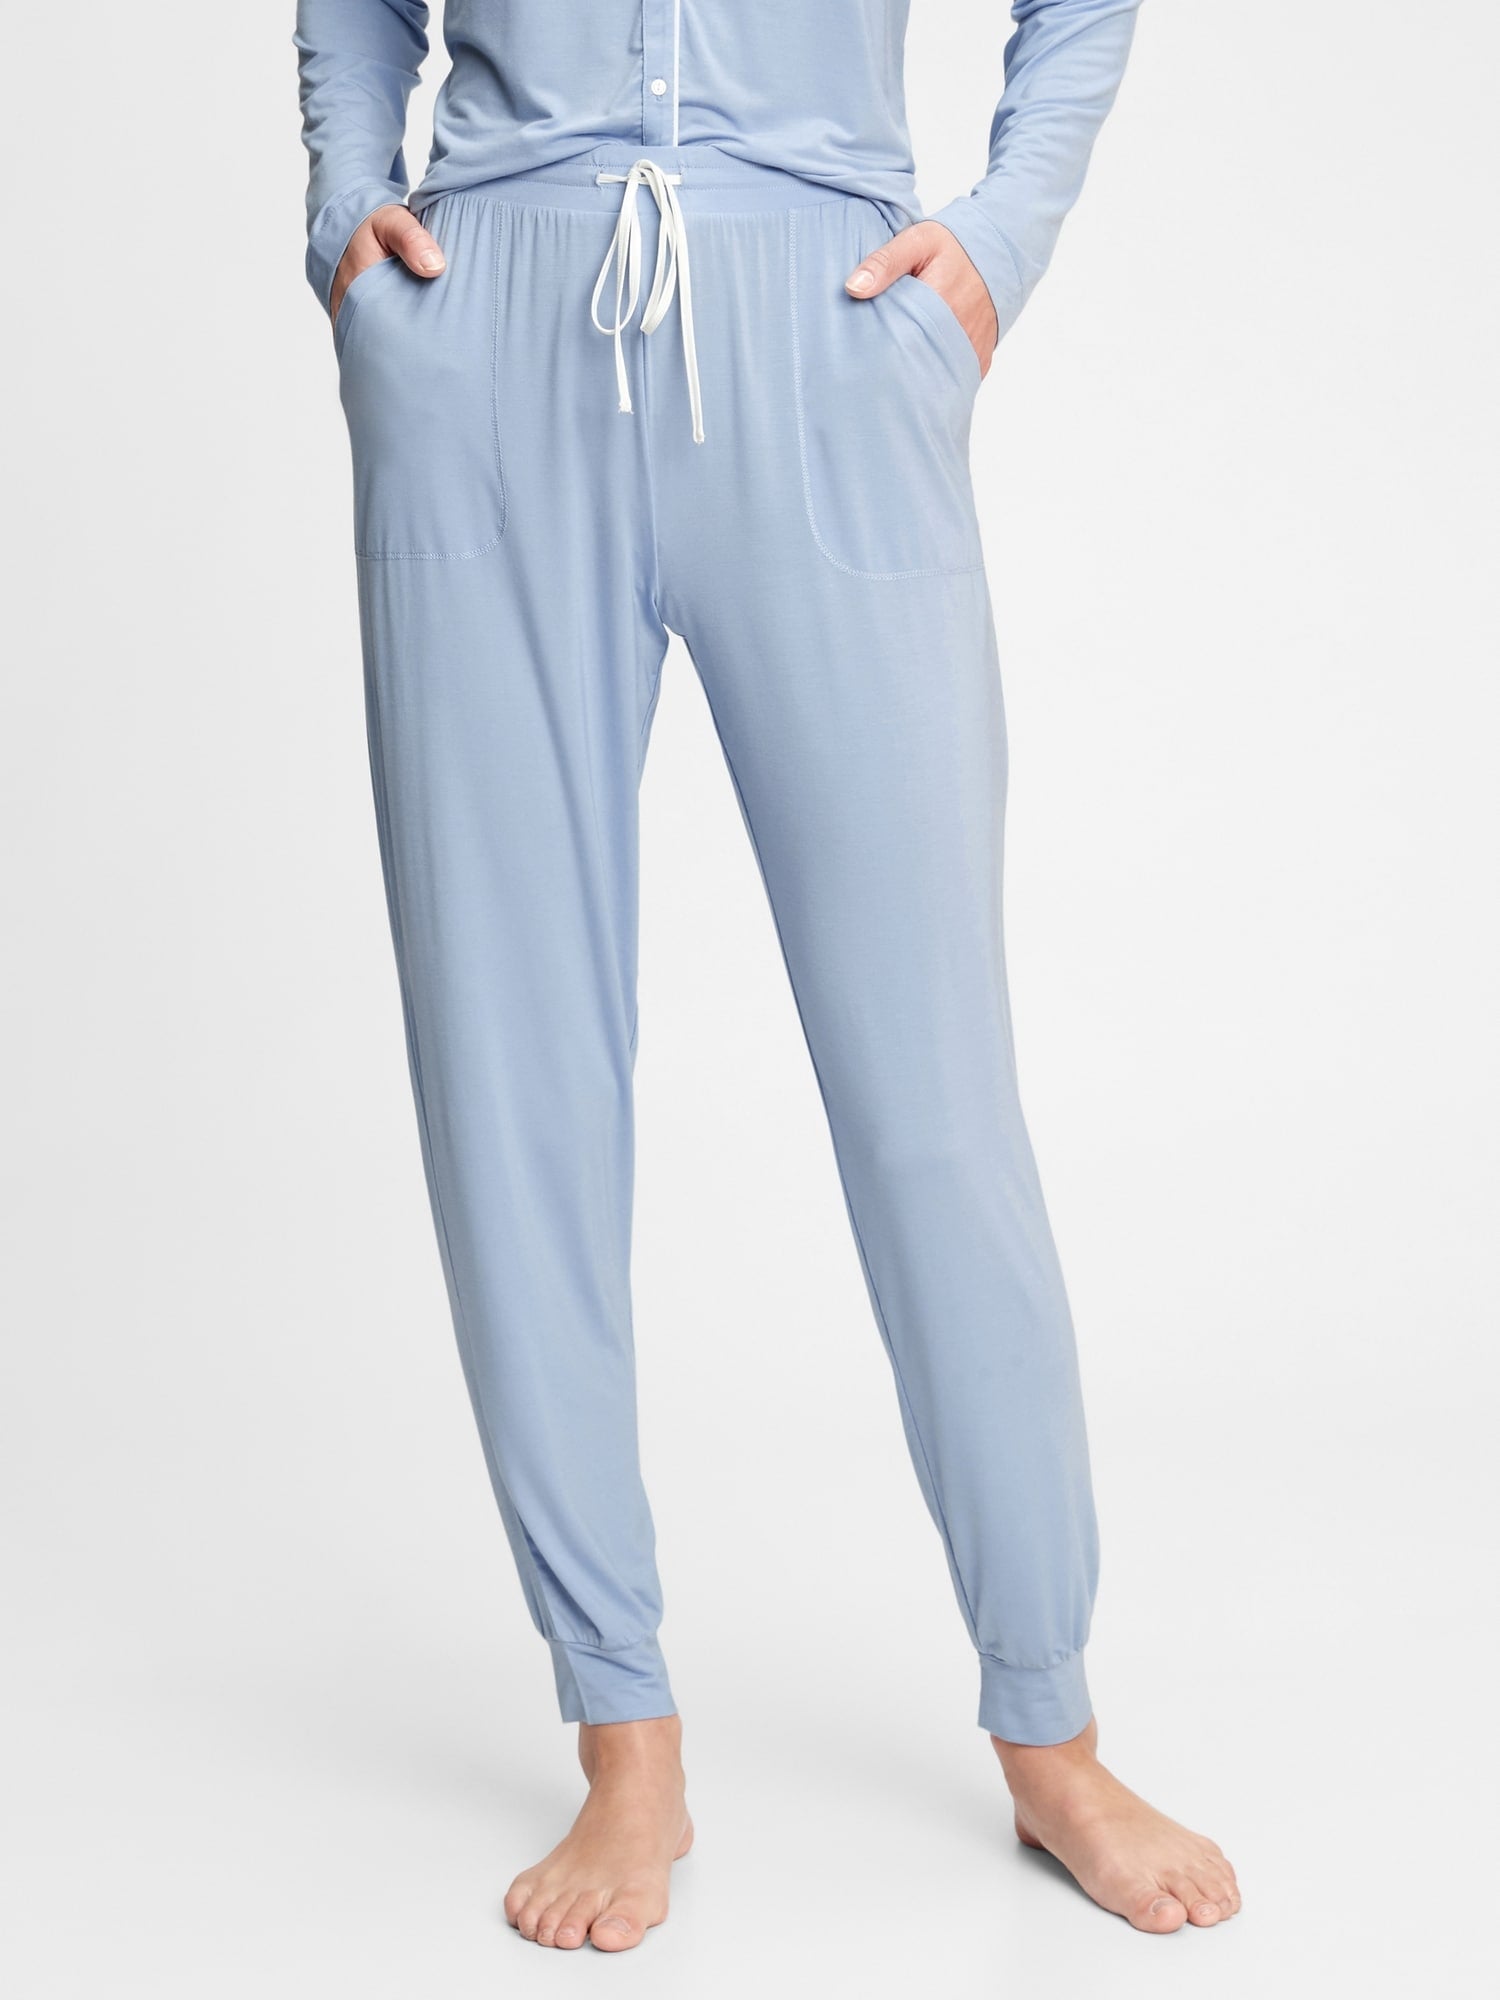 Women's Pajamas, Sleepwear & Nightgowns